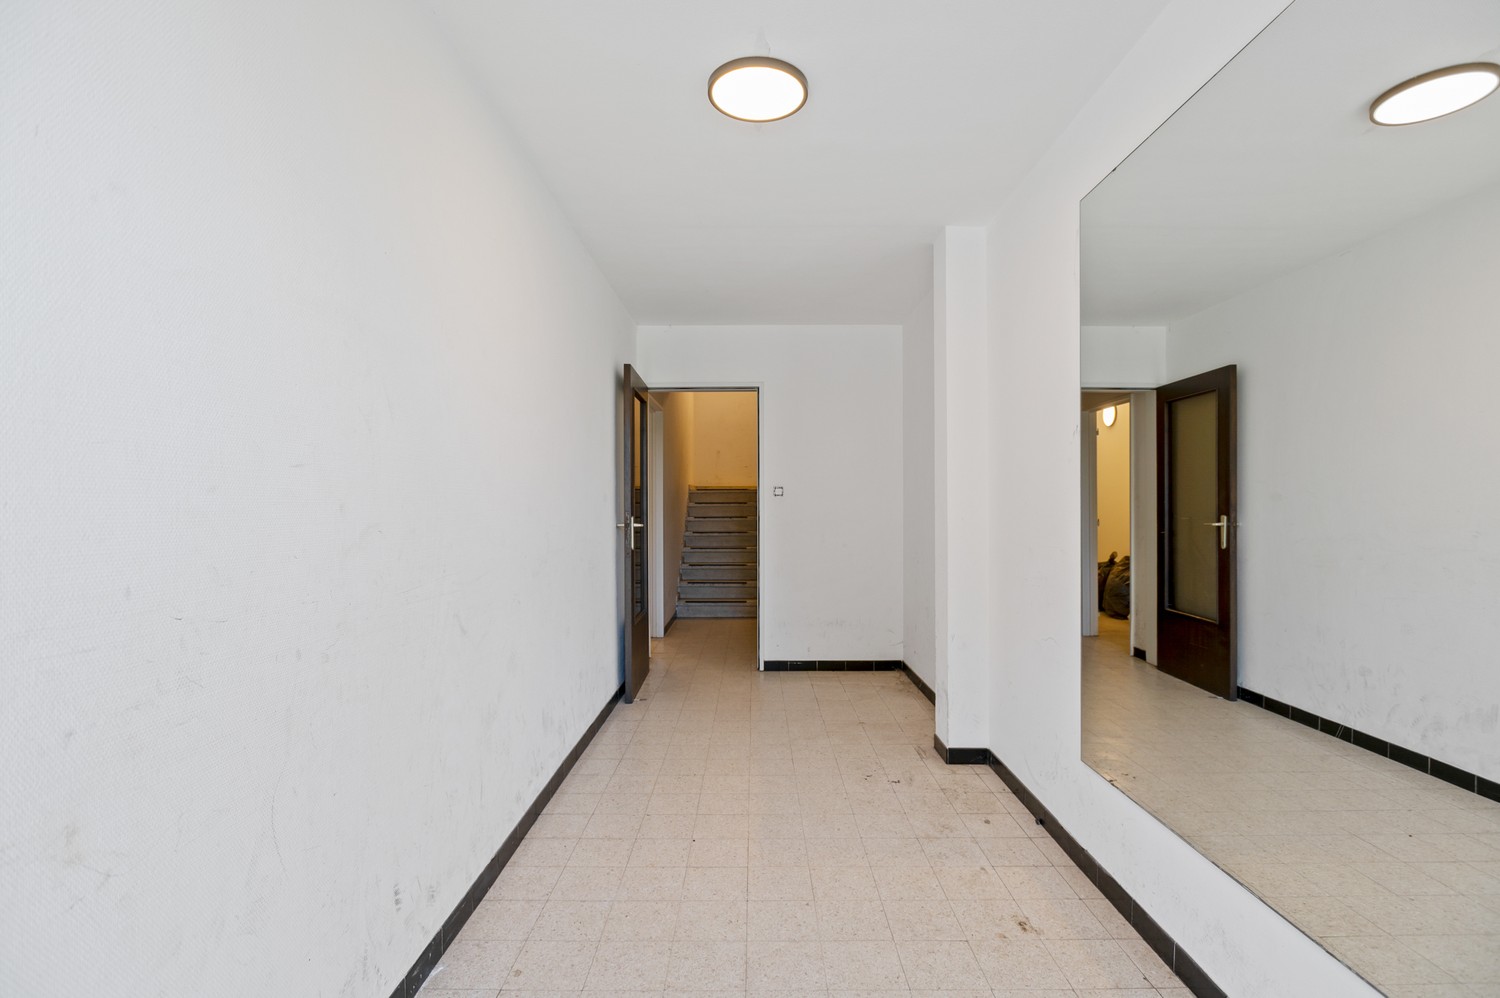 Hoogwaardig vernieuwd appartement met twee slaapkamers en terras in Deurne! afbeelding 2